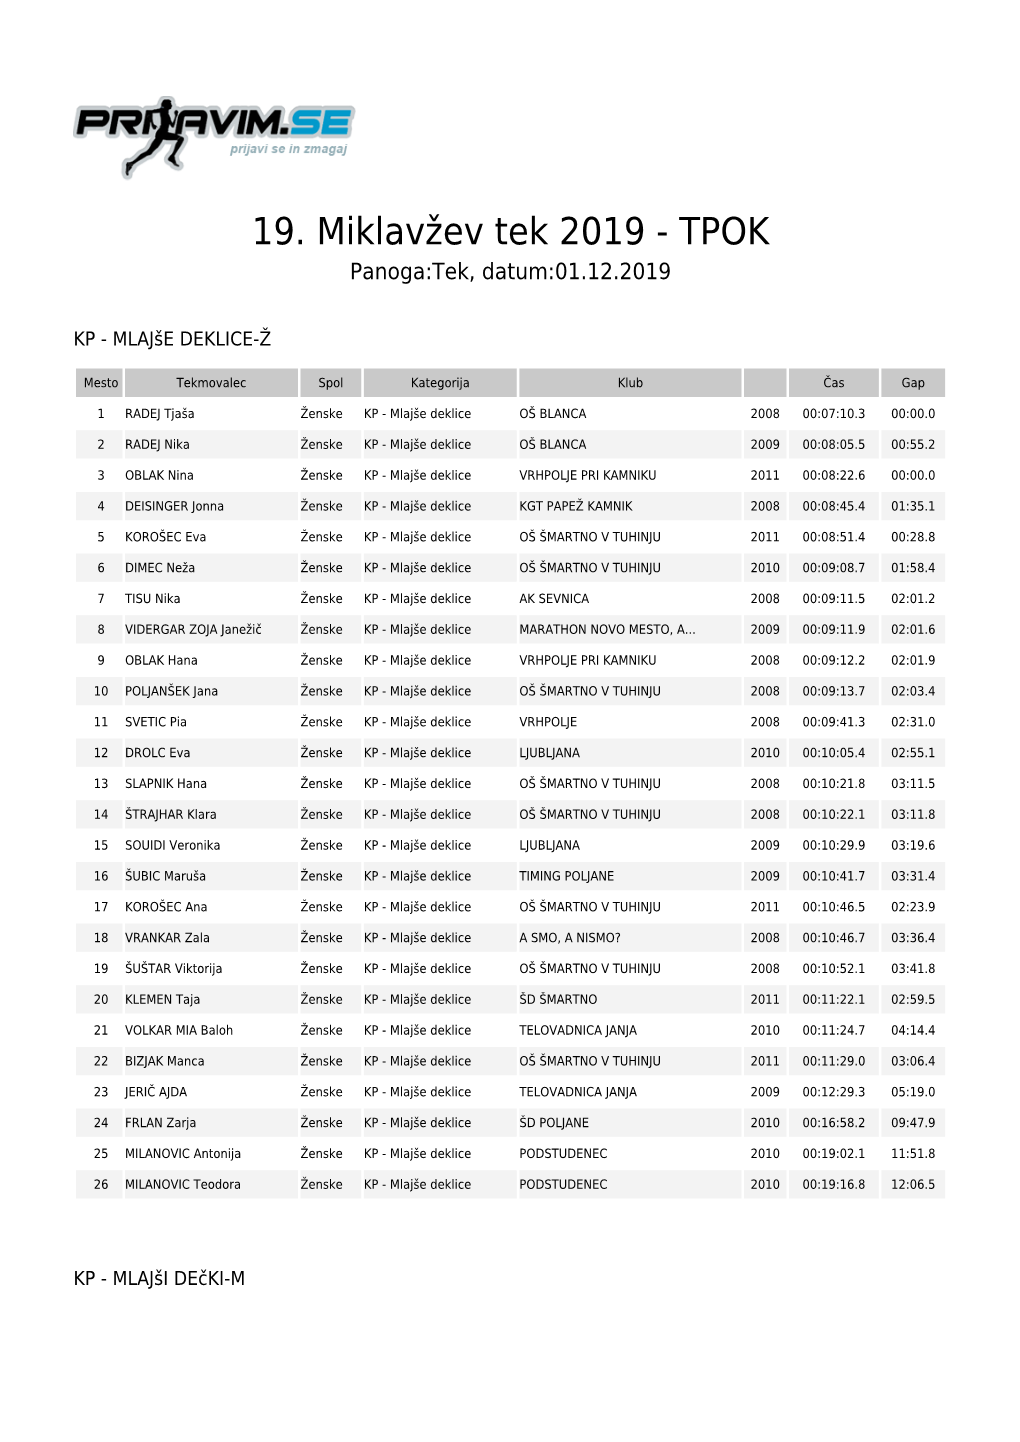 19. Miklavžev Tek 2019 - TPOK Panoga:Tek, Datum:01.12.2019